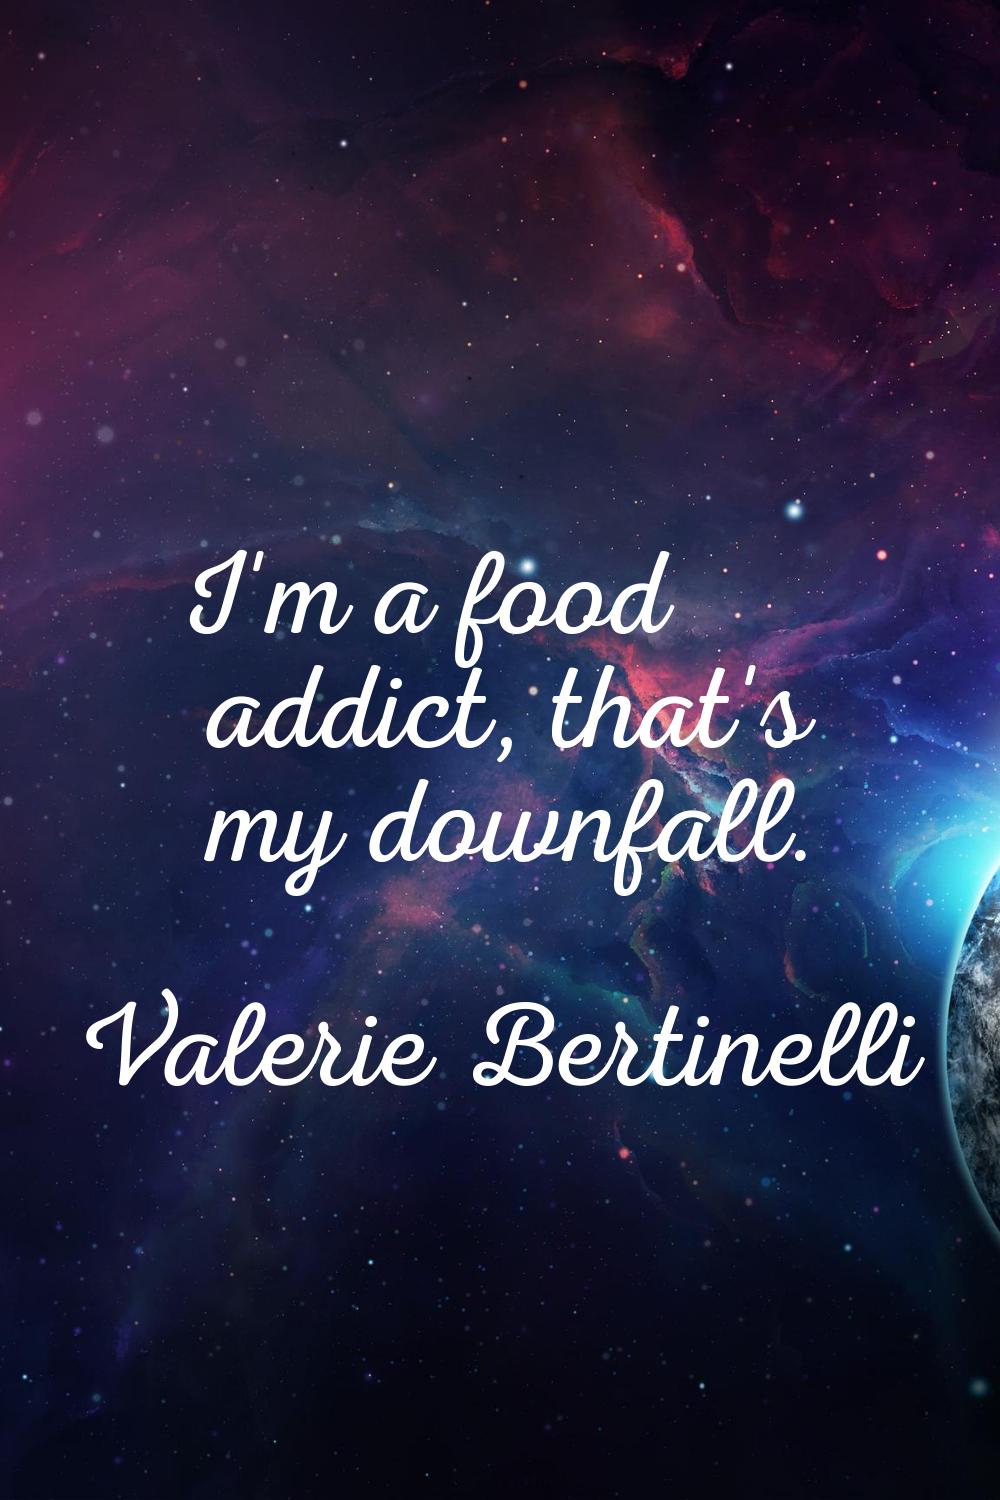 I'm a food addict, that's my downfall.